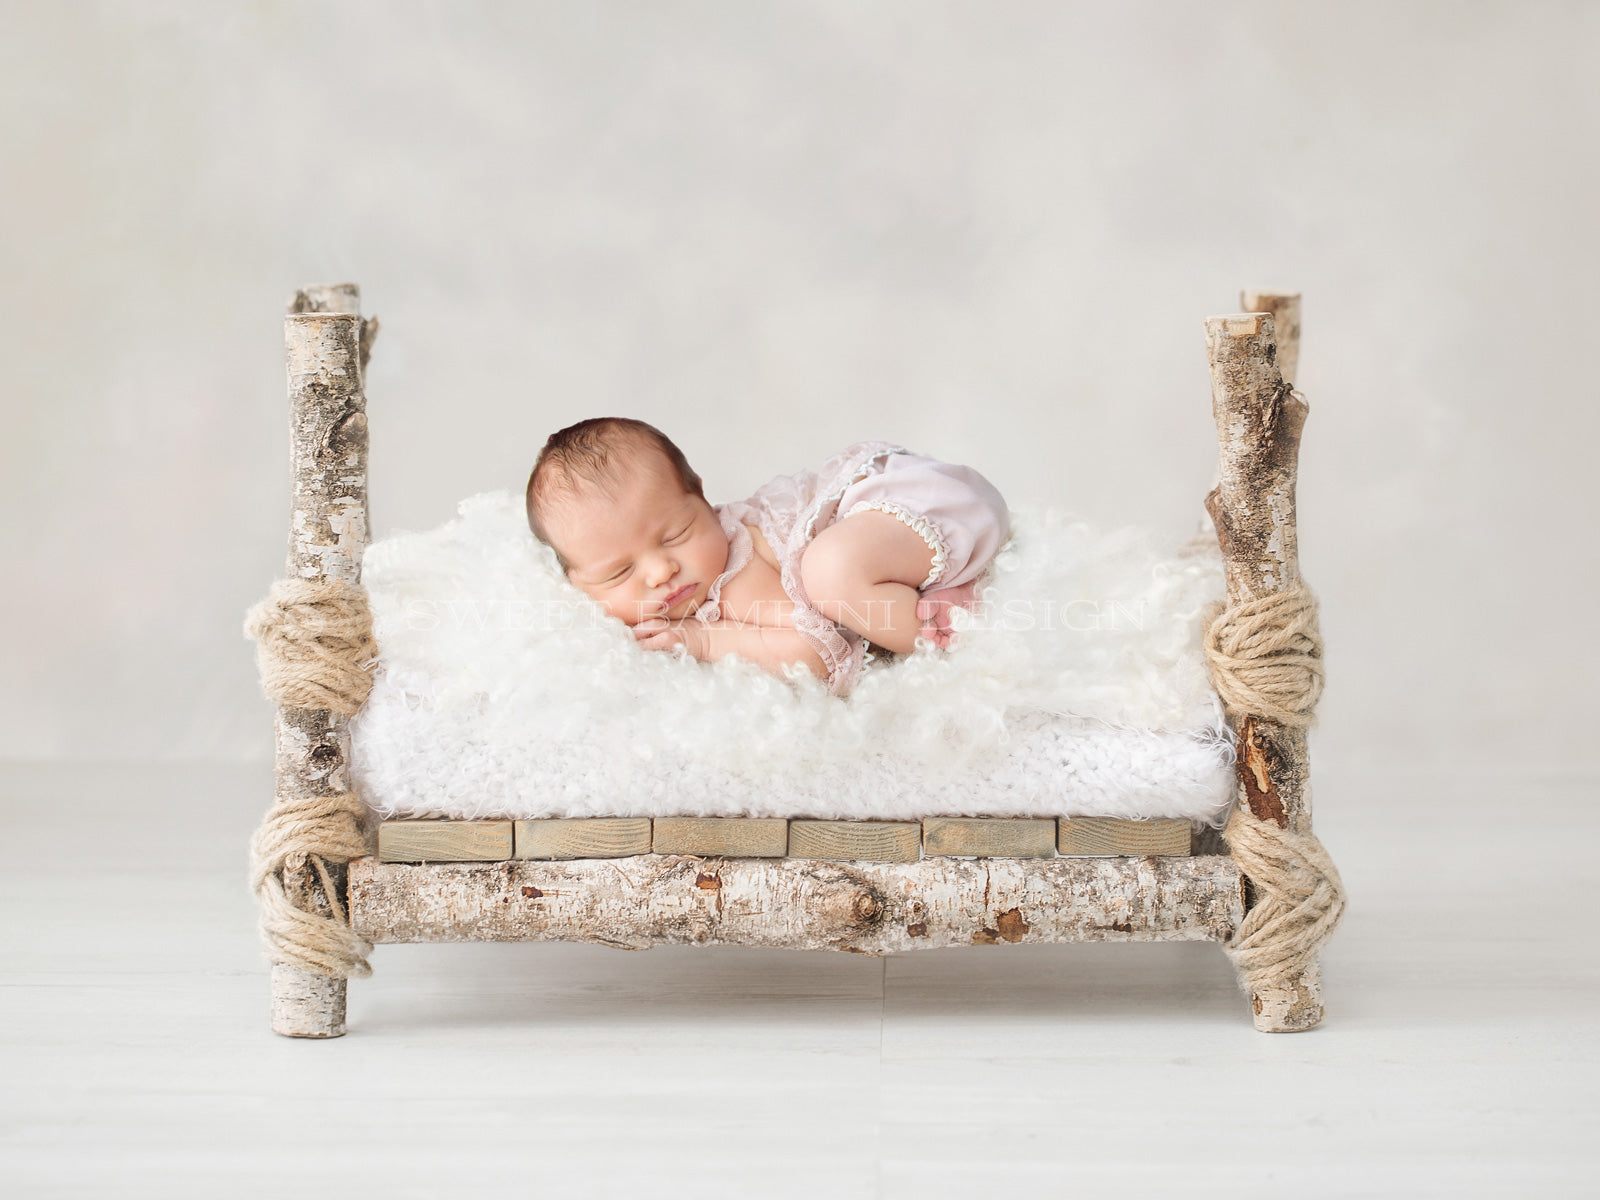 Newborn Photography Digital Backdrop for girls or boys - Simple rustic